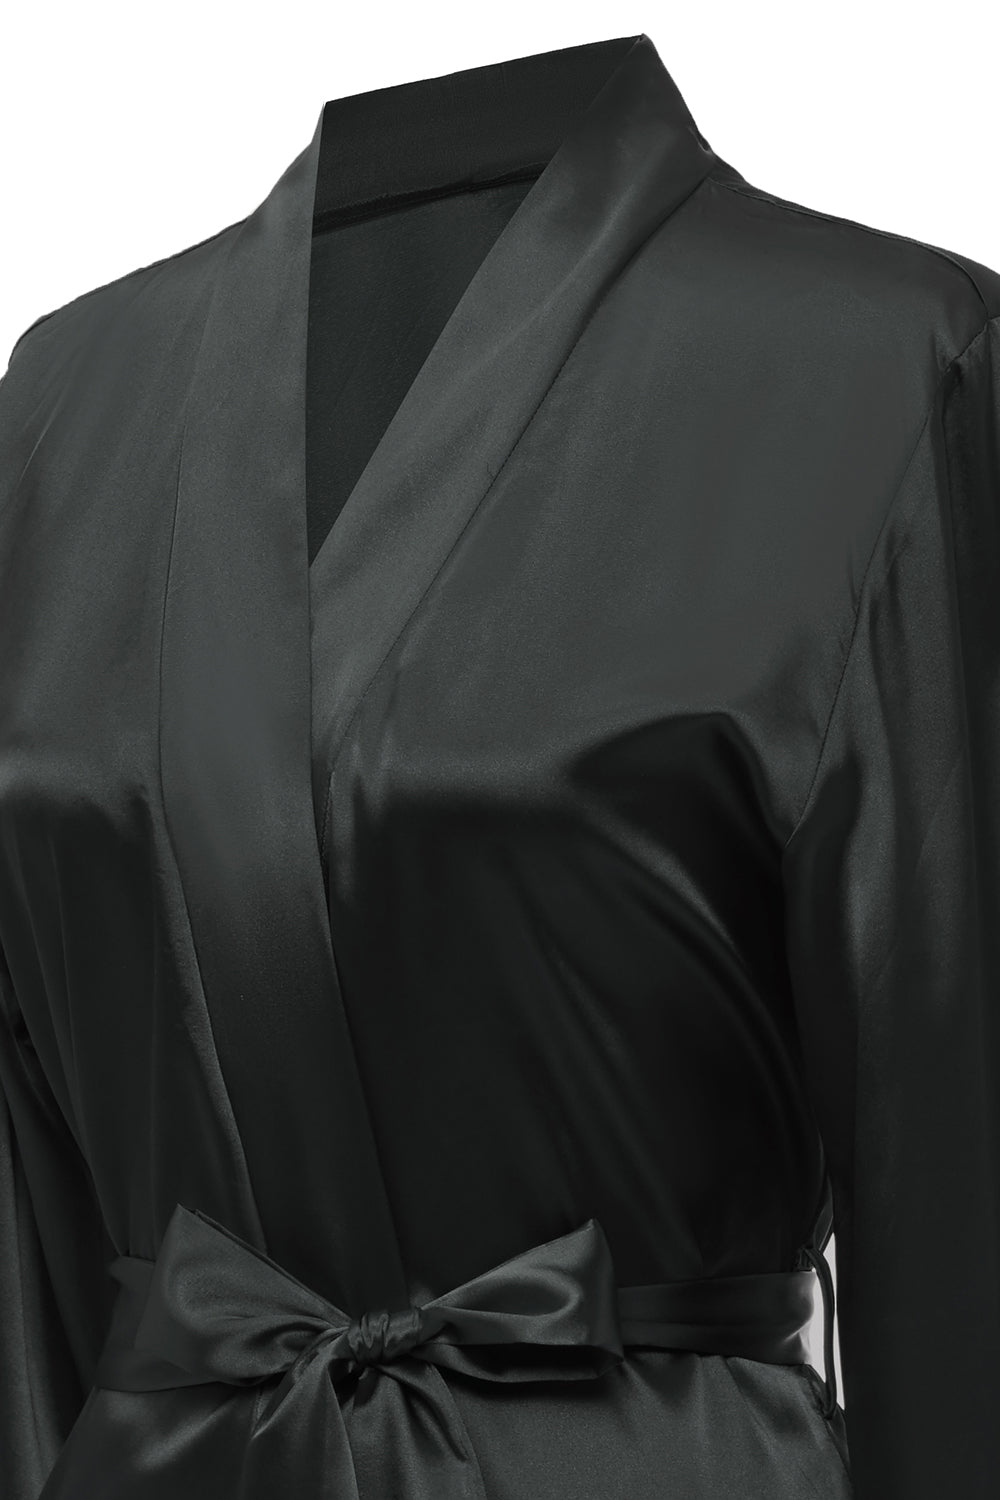 Black Bridesamaid Robe With Lace